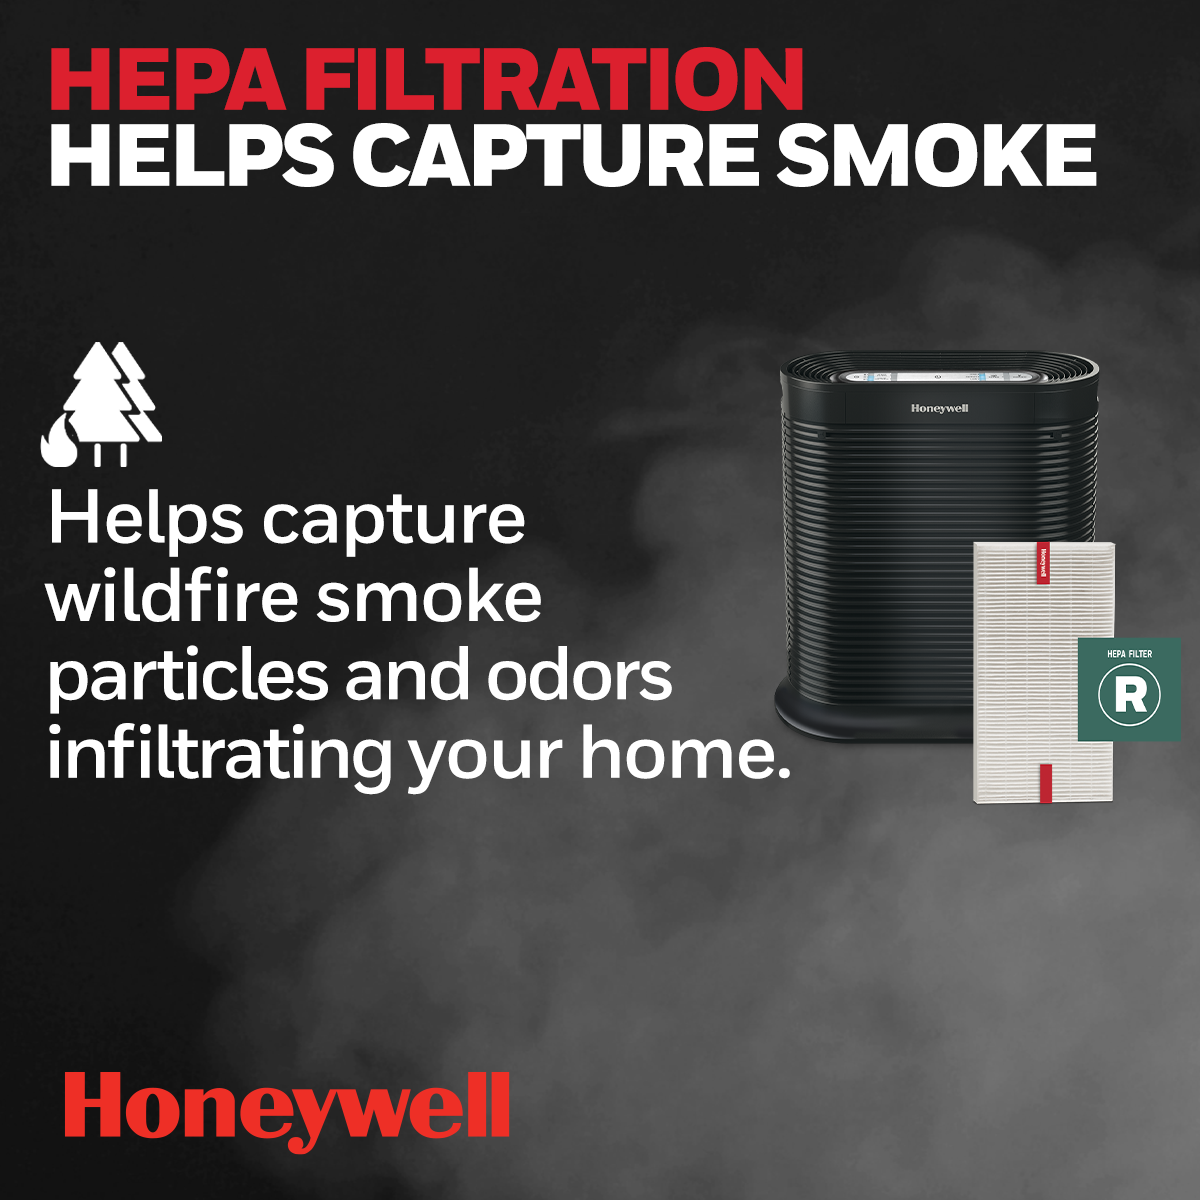 Honeywell Air Purifier, HPA300, 465 sq ft, HEPA Filter, Allergen, Smoke, Pollen, Dust Reducer - image 5 of 13